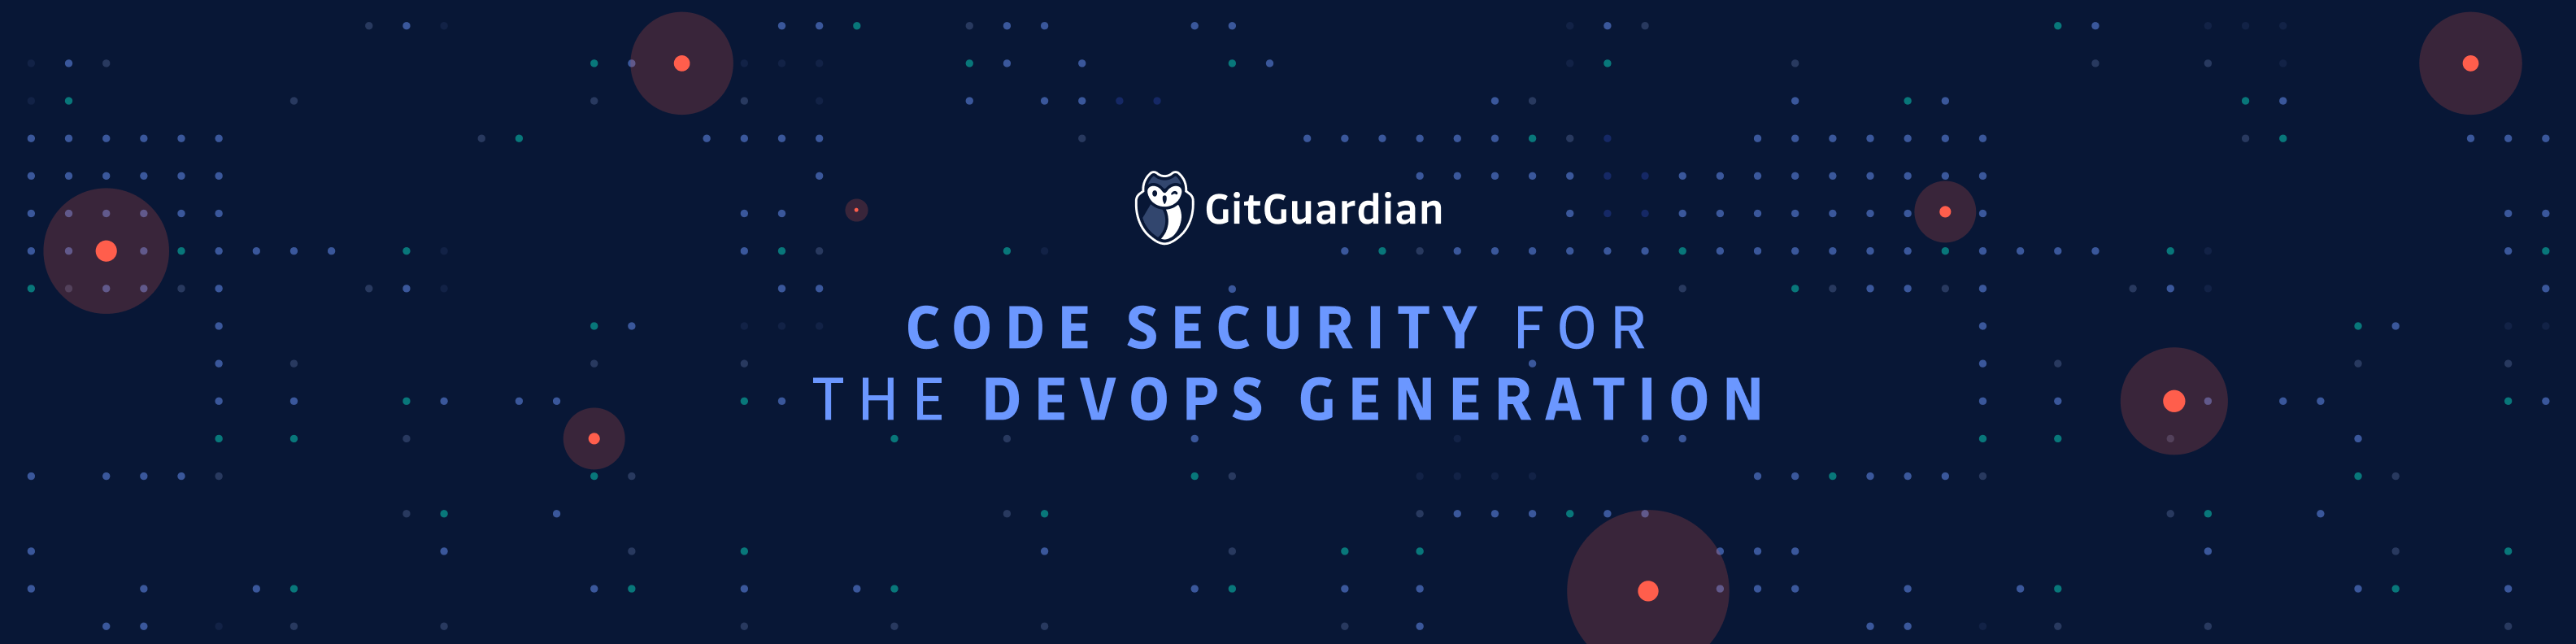 Review GitGuardian: Code security solutions for the DevOps generation - Appvizer